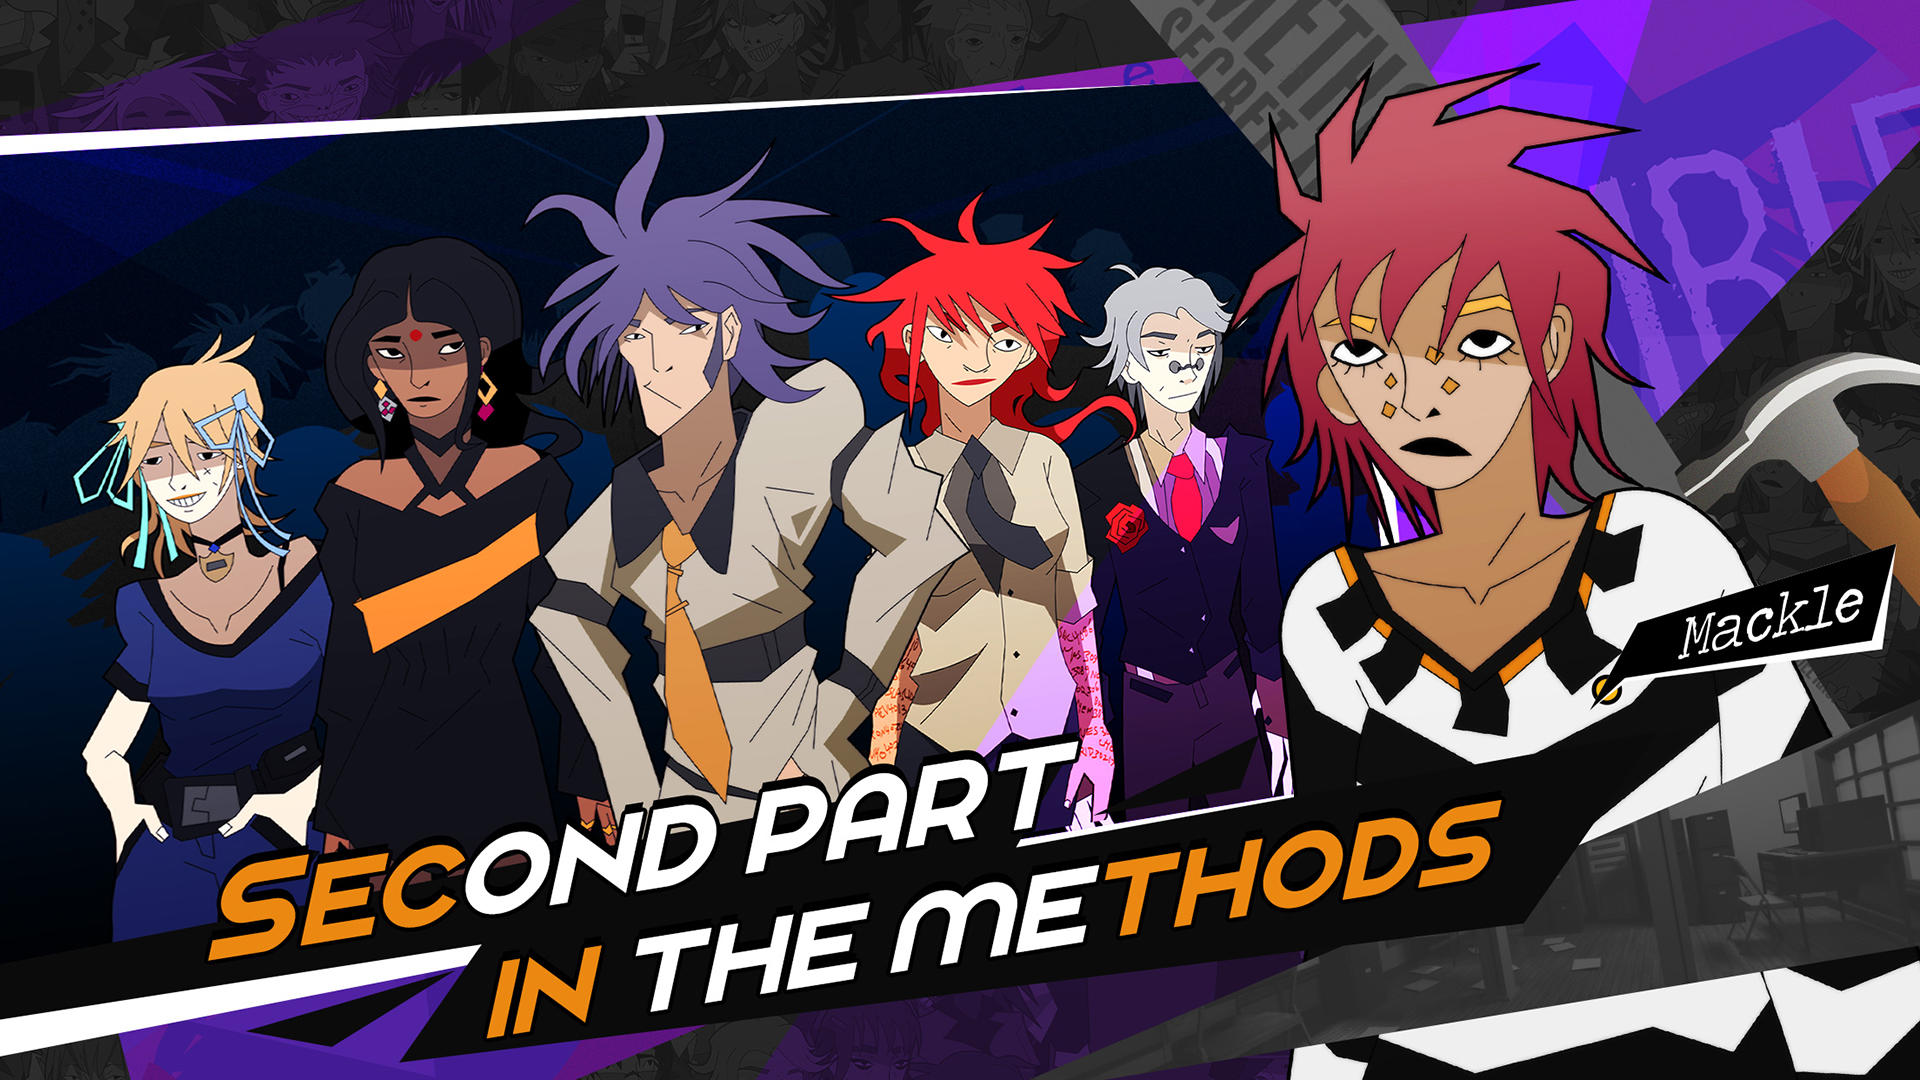 Methods2: Secrets and Death screenshot game